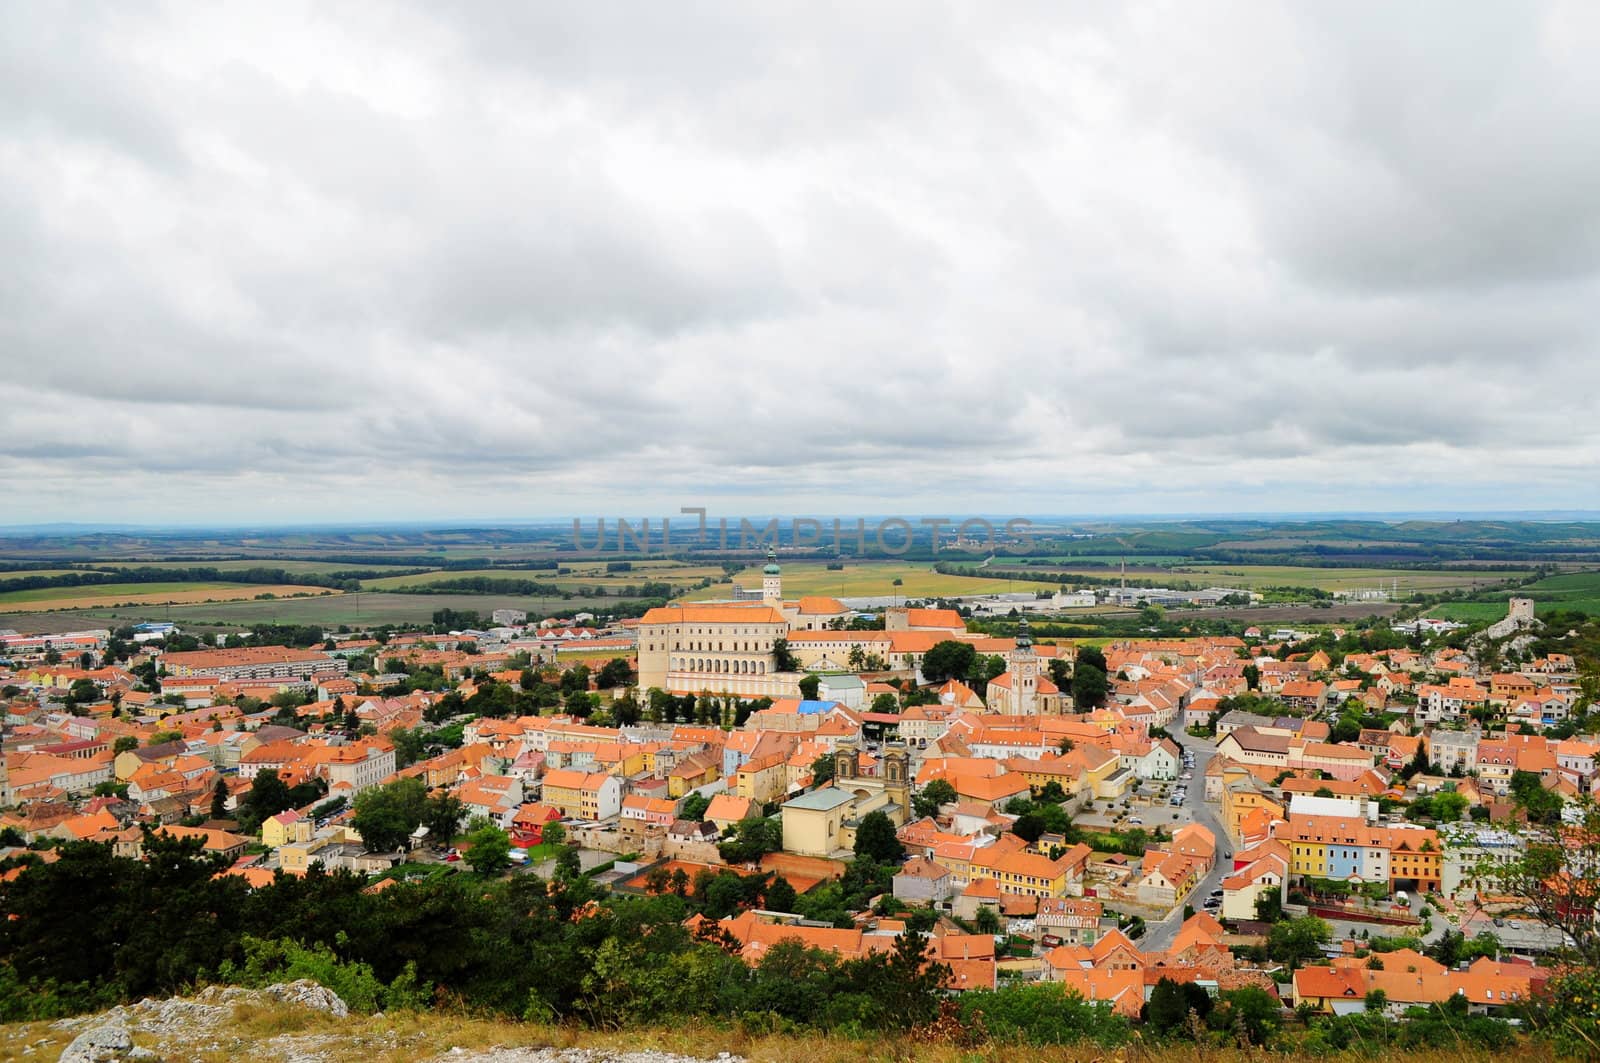 Czech Moravian landscape by AnnaNouvier